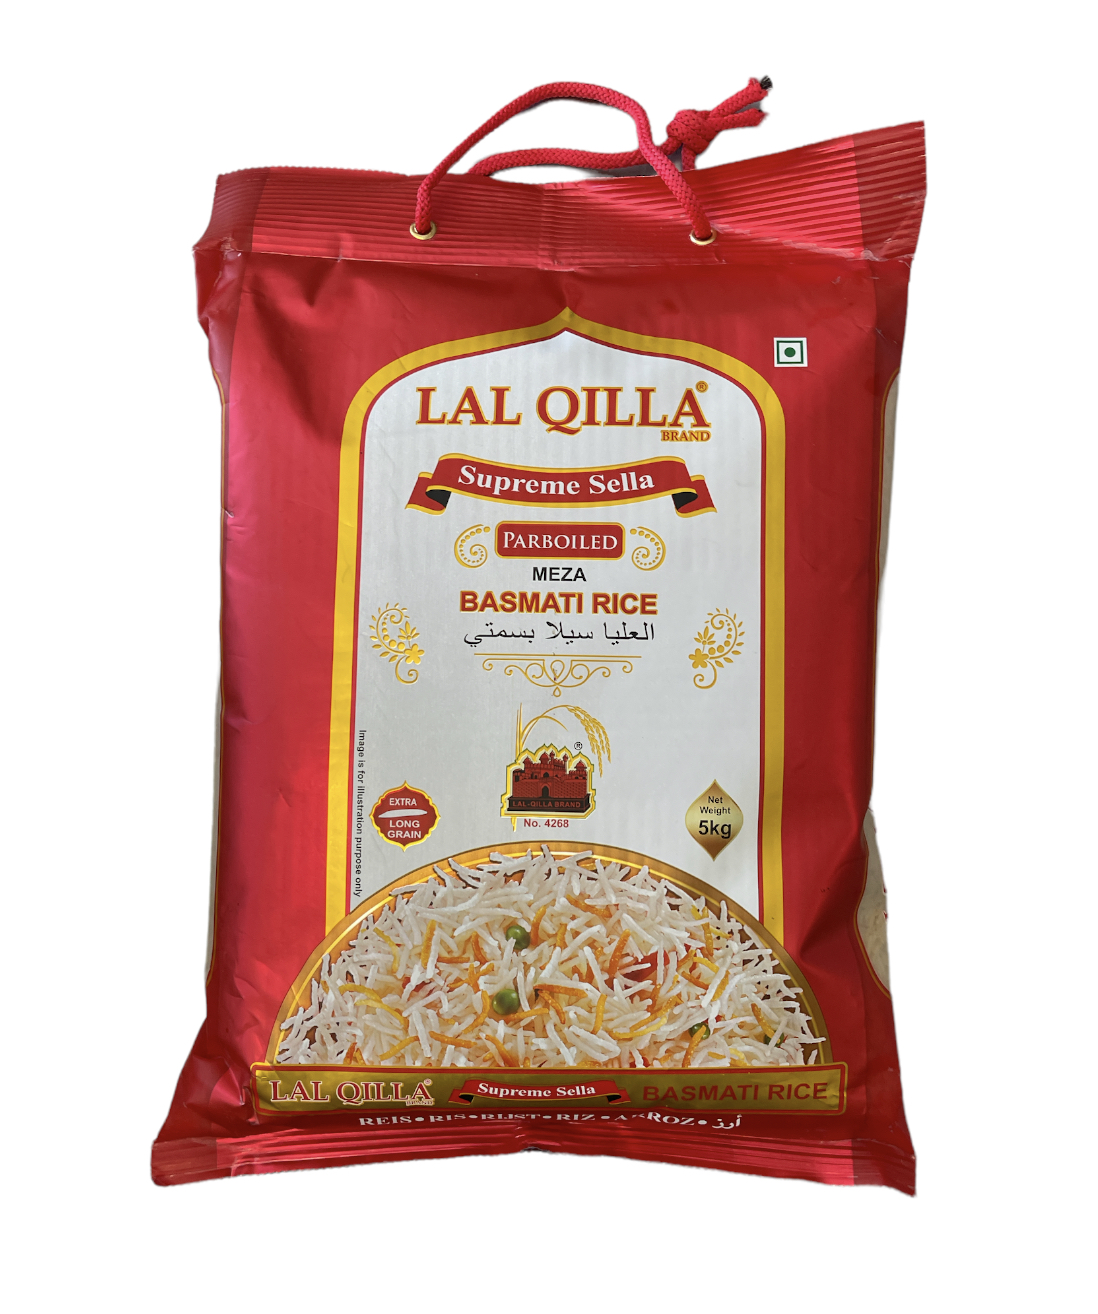 Lal Qilla Supreme Sella Rice Parboiled Meza Basmati Rice 5kg